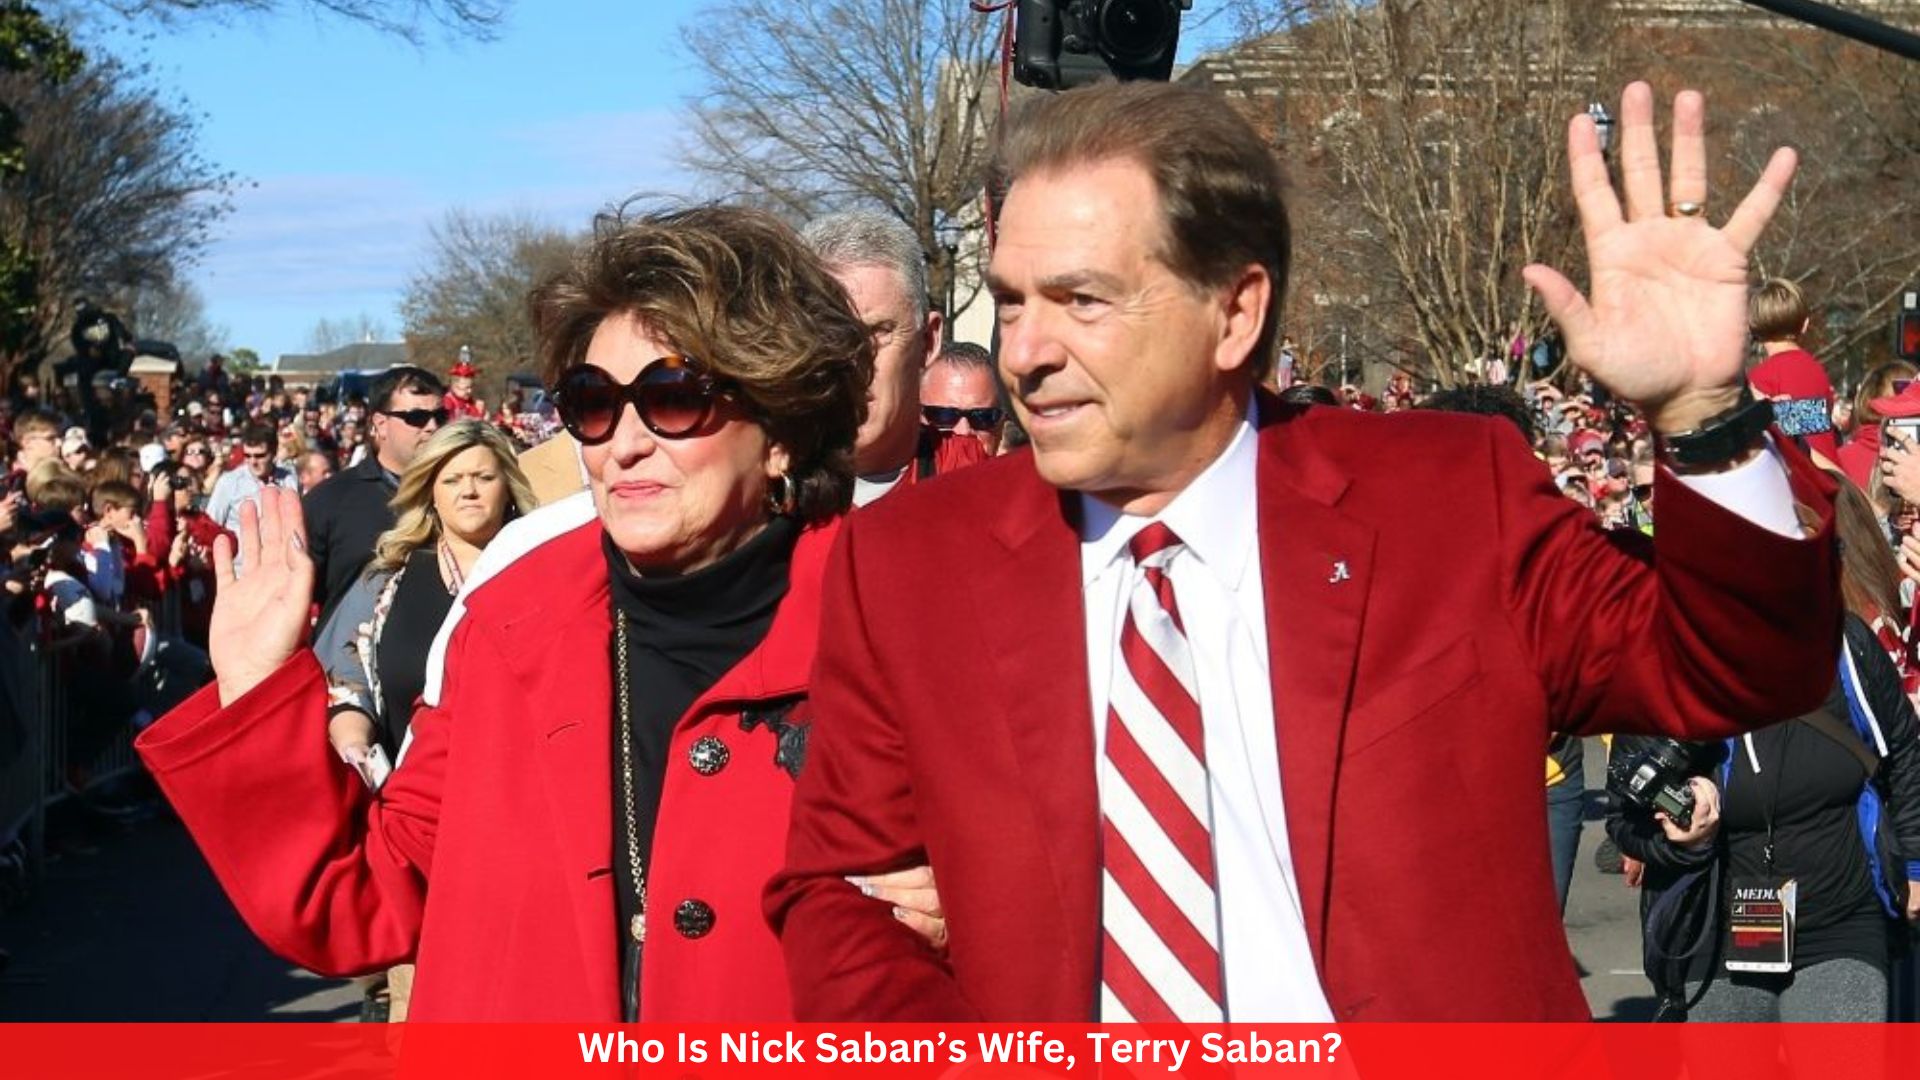 Who Is Nick Saban’s Wife, Terry Saban?